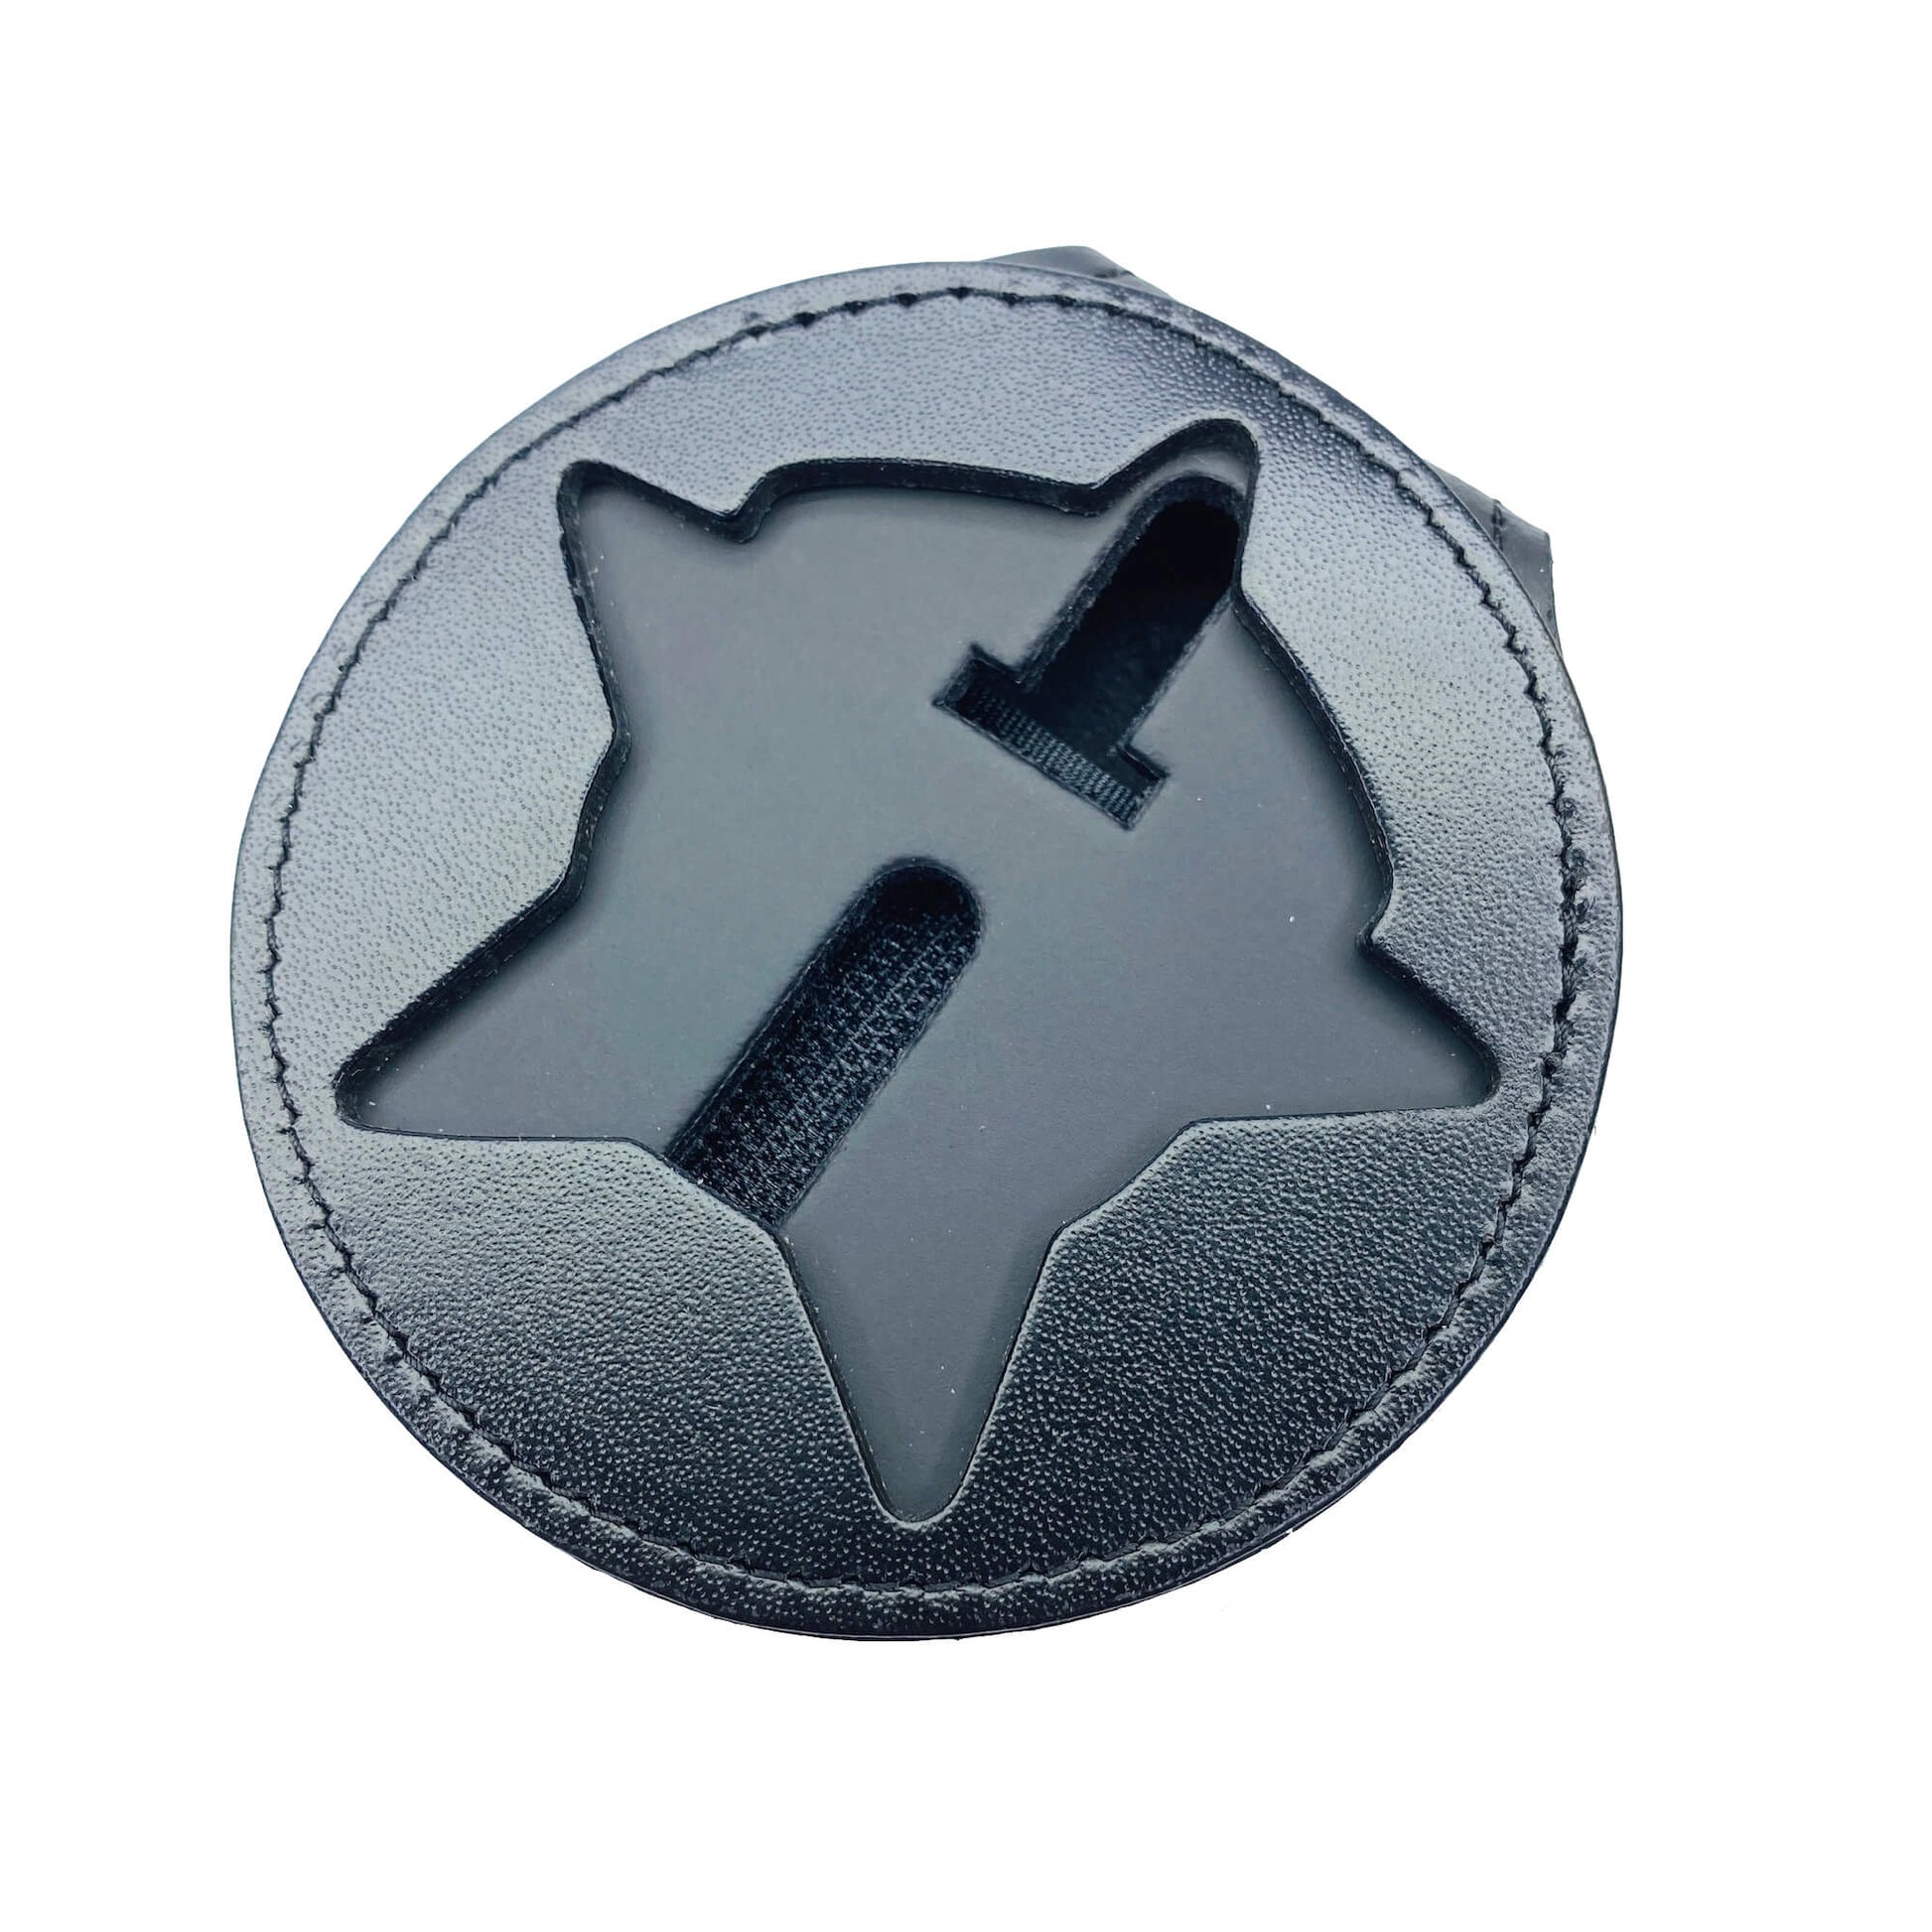 Police Badge Id Holder, Metal Certificate Holder